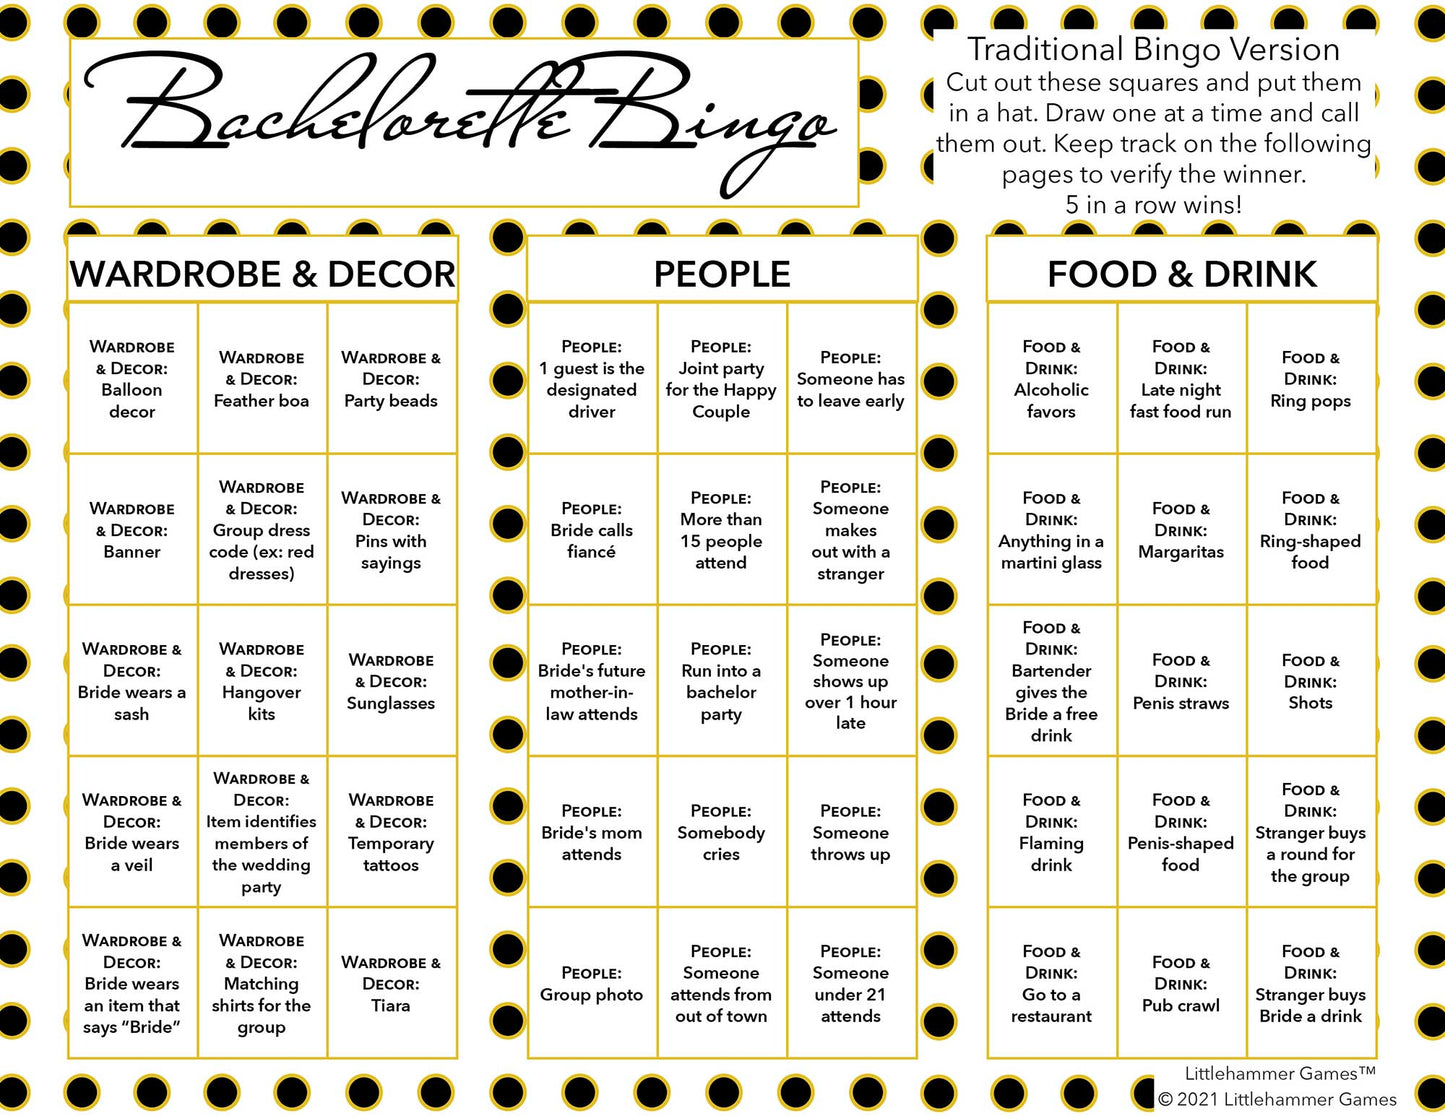 Bachelorette Bingo calling card with a black and gold polka dot background